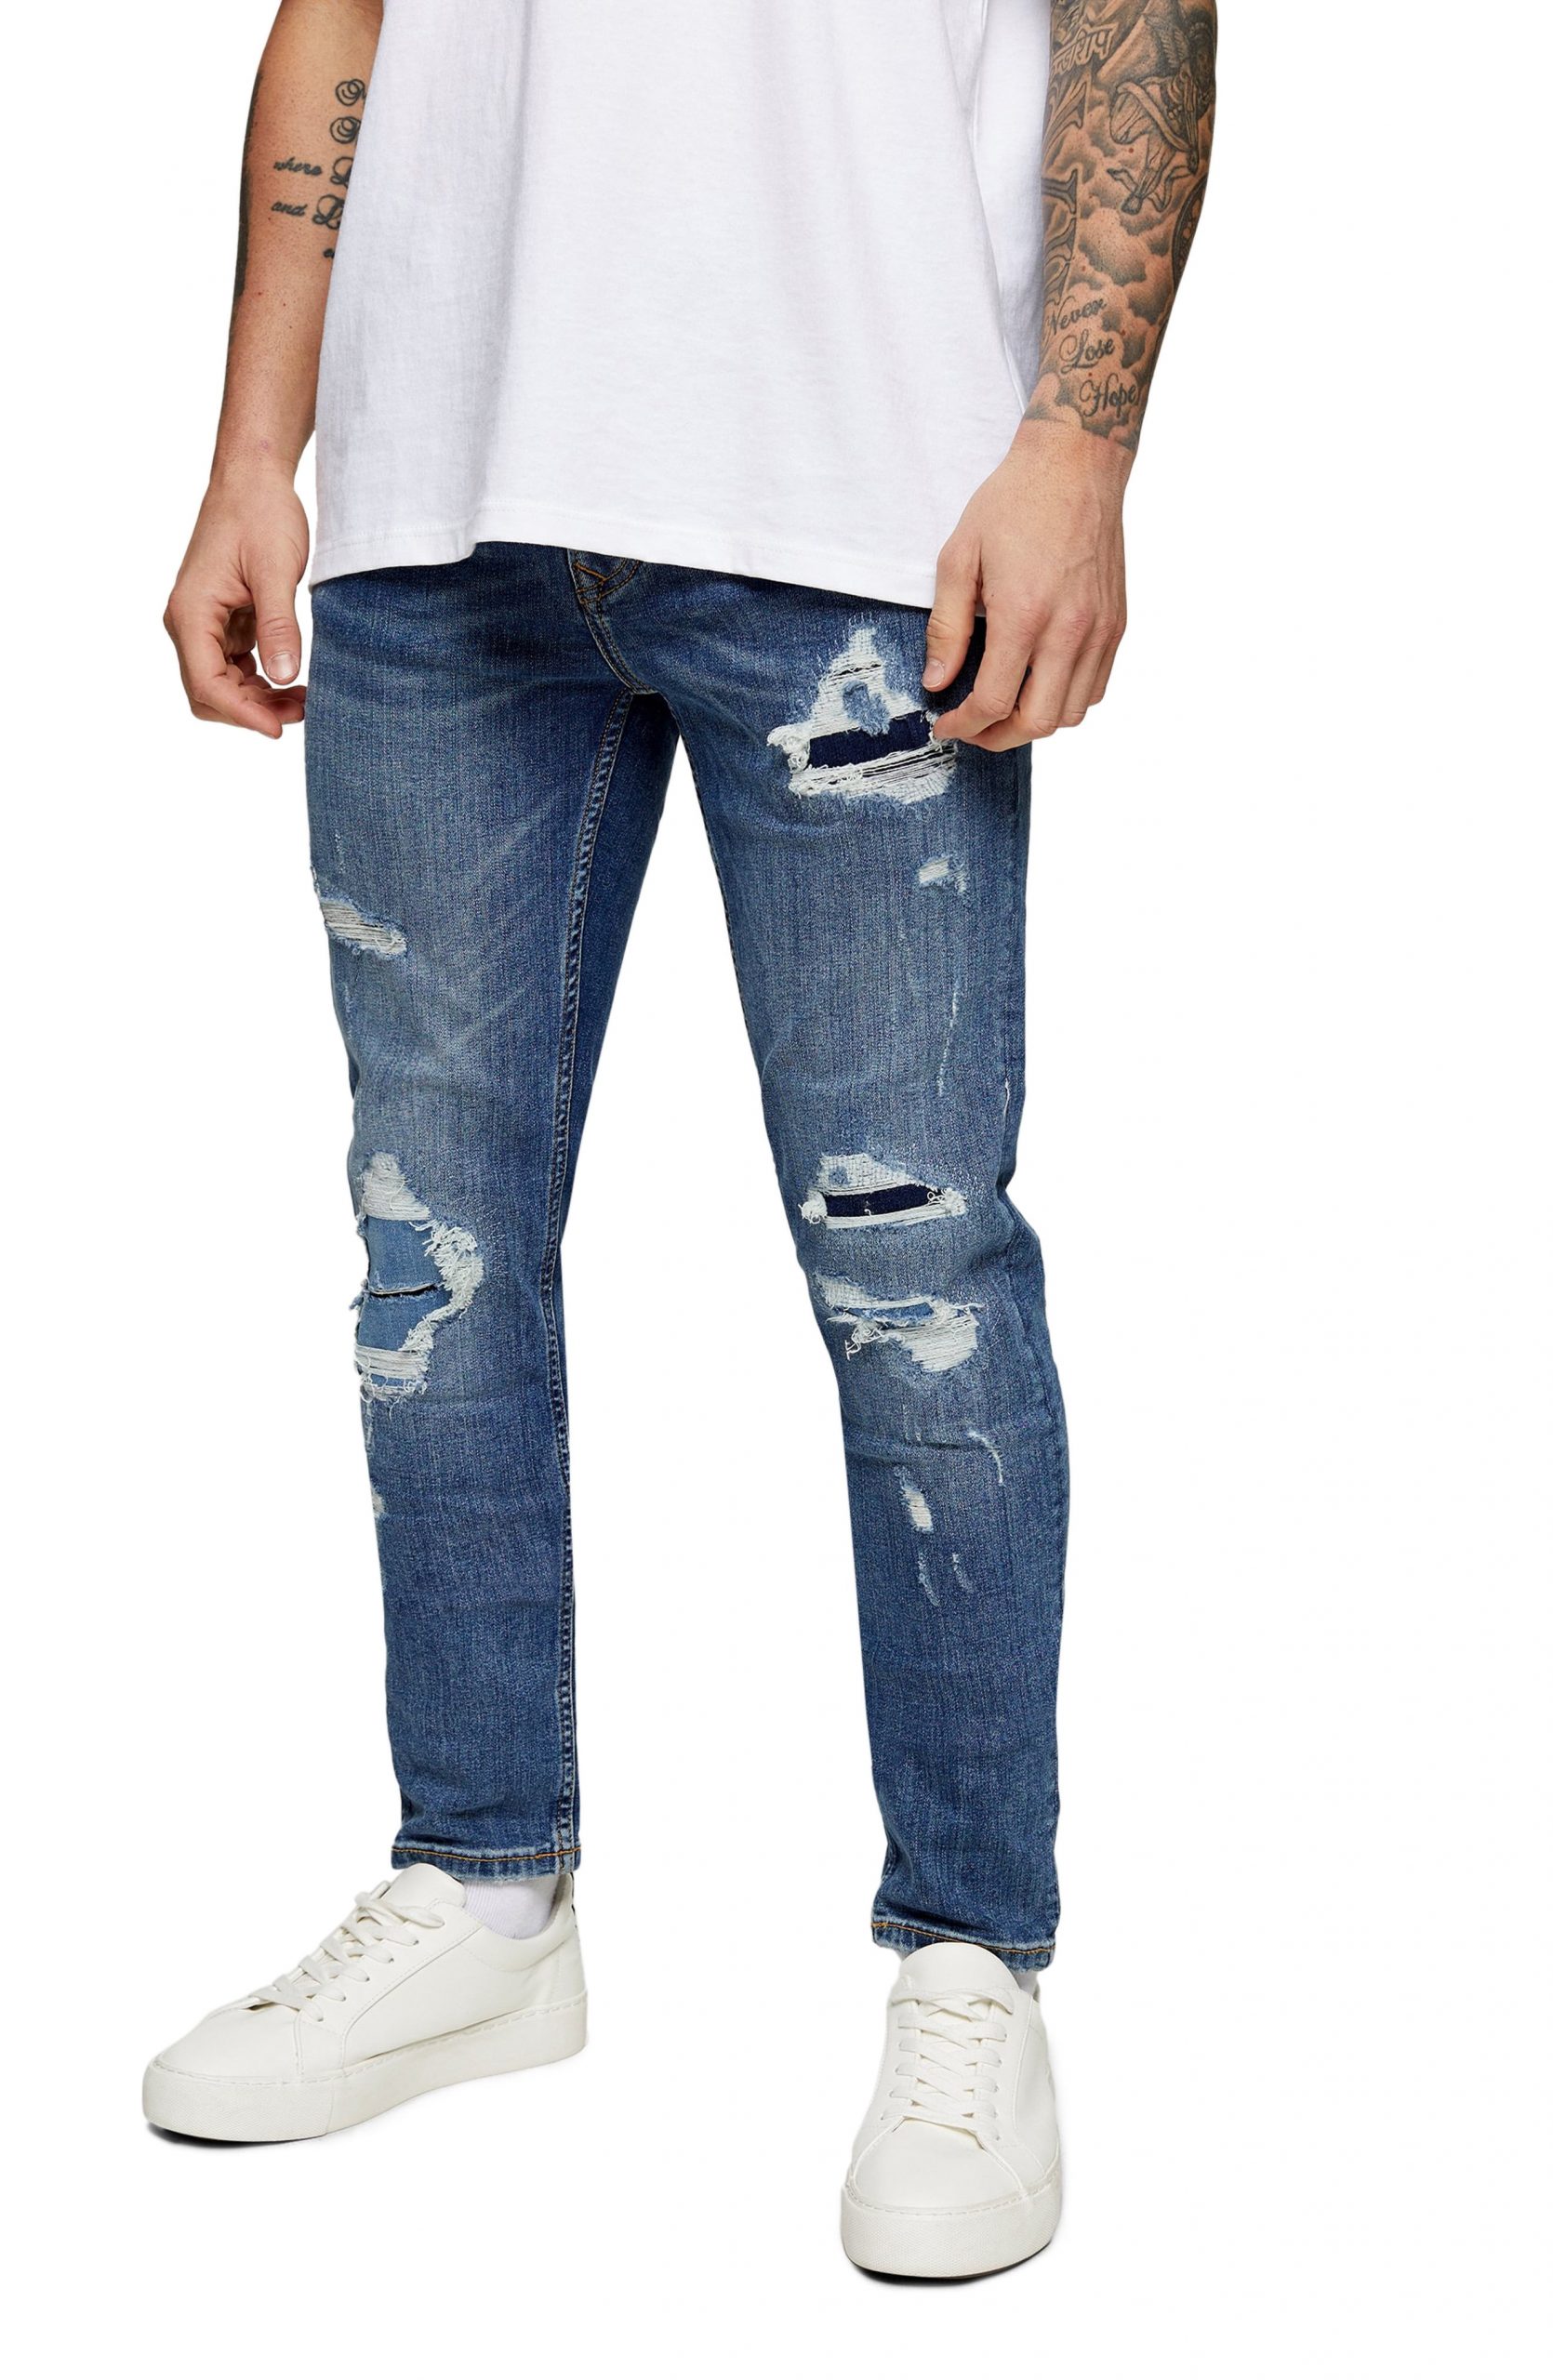 Men’s Topman Mist Distressed Skinny Jeans, Size 32 x 32 - Blue | The ...